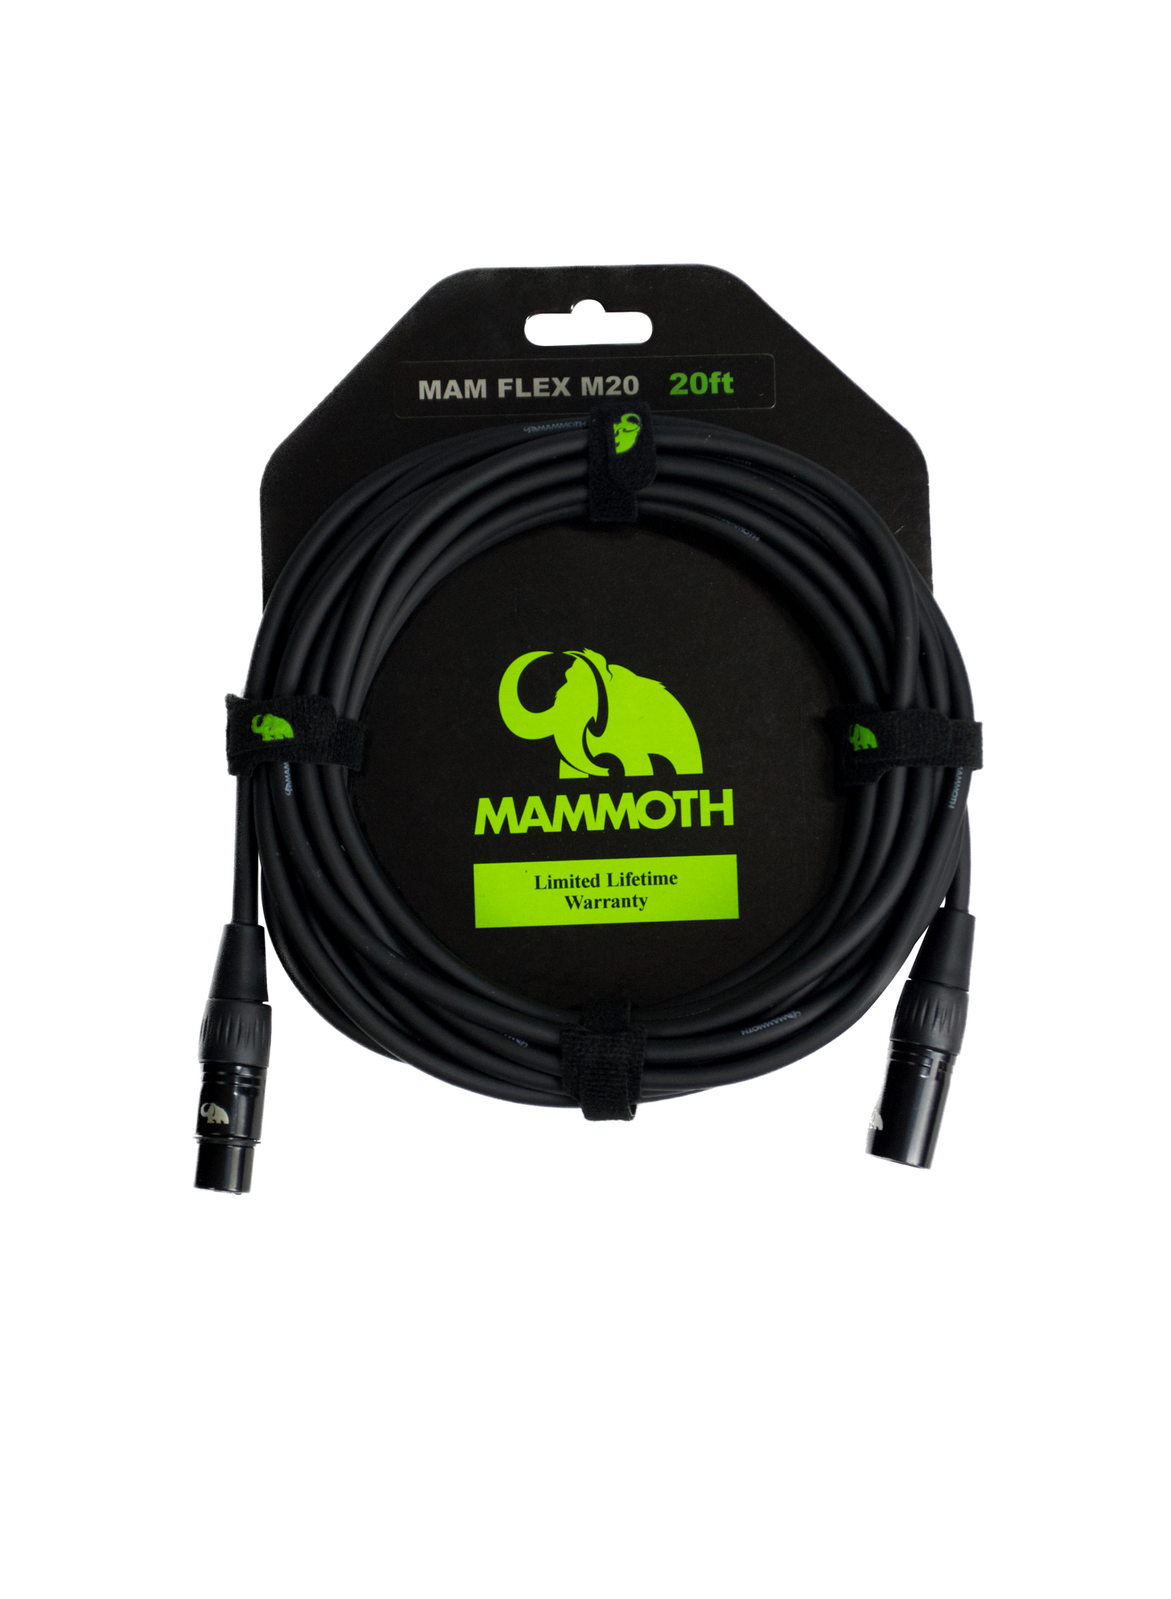 Mammoth Flex M20 20ft Microphone Cable XLR to XLR